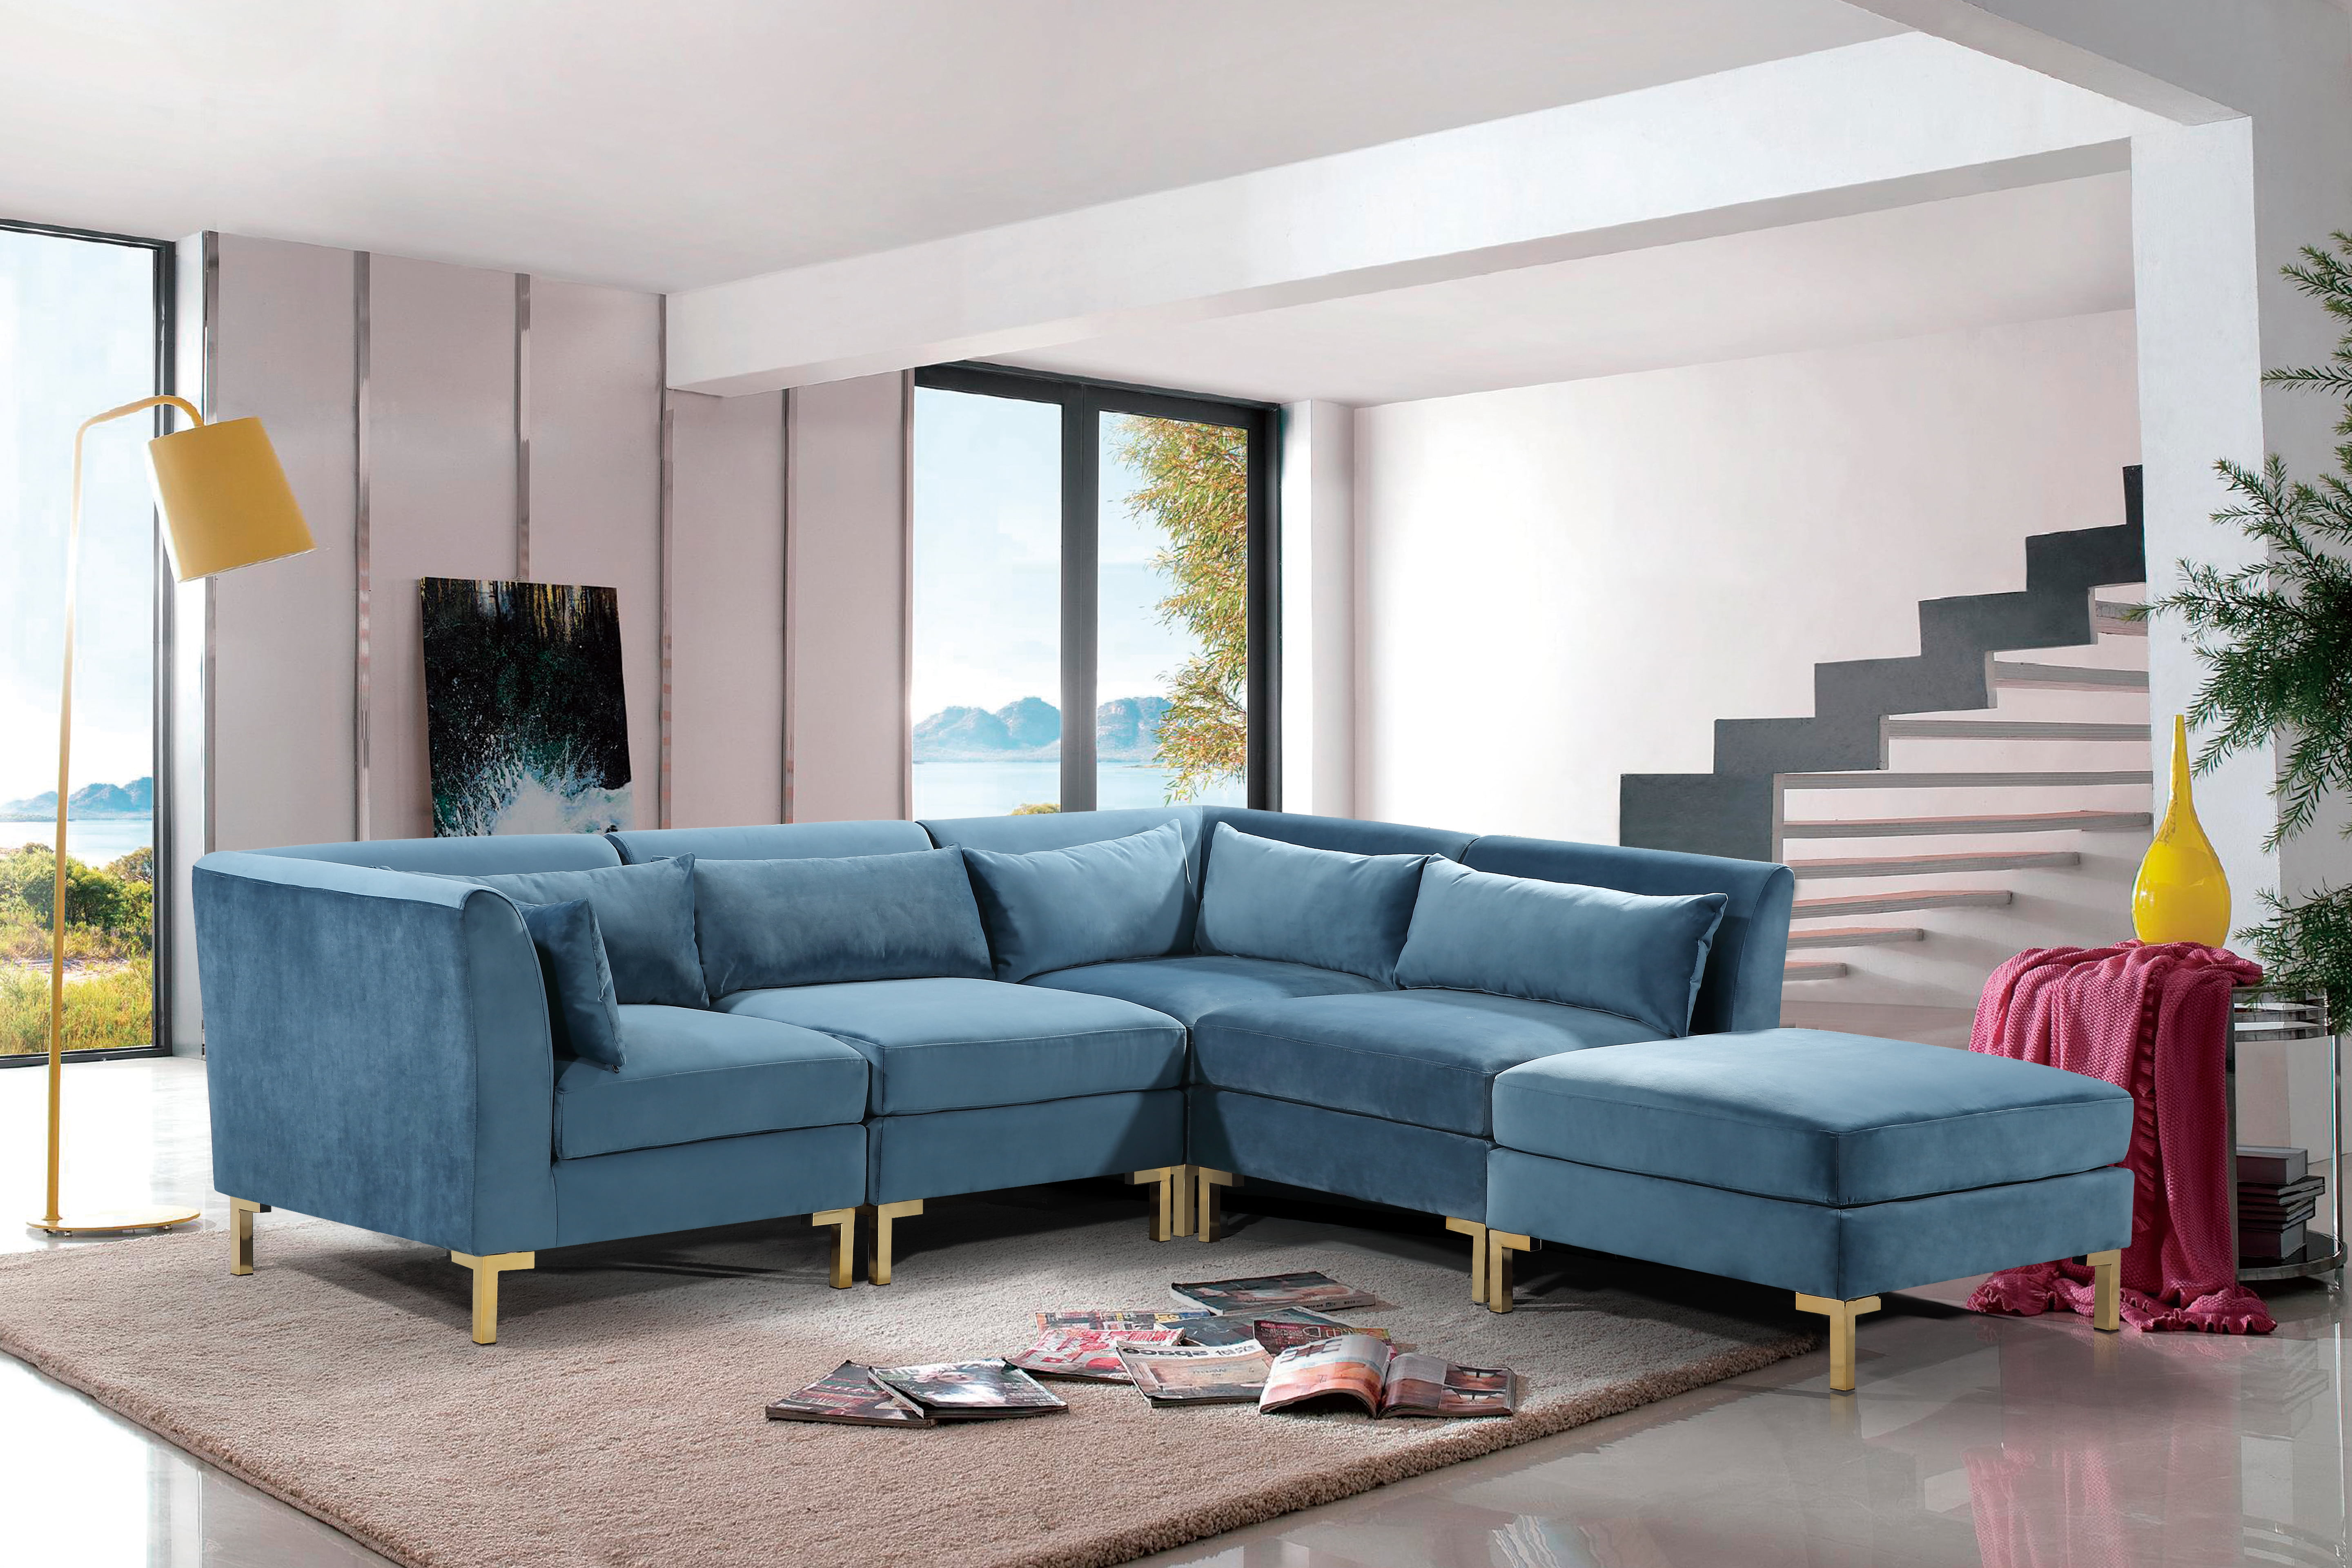 modular chaise sofa bed